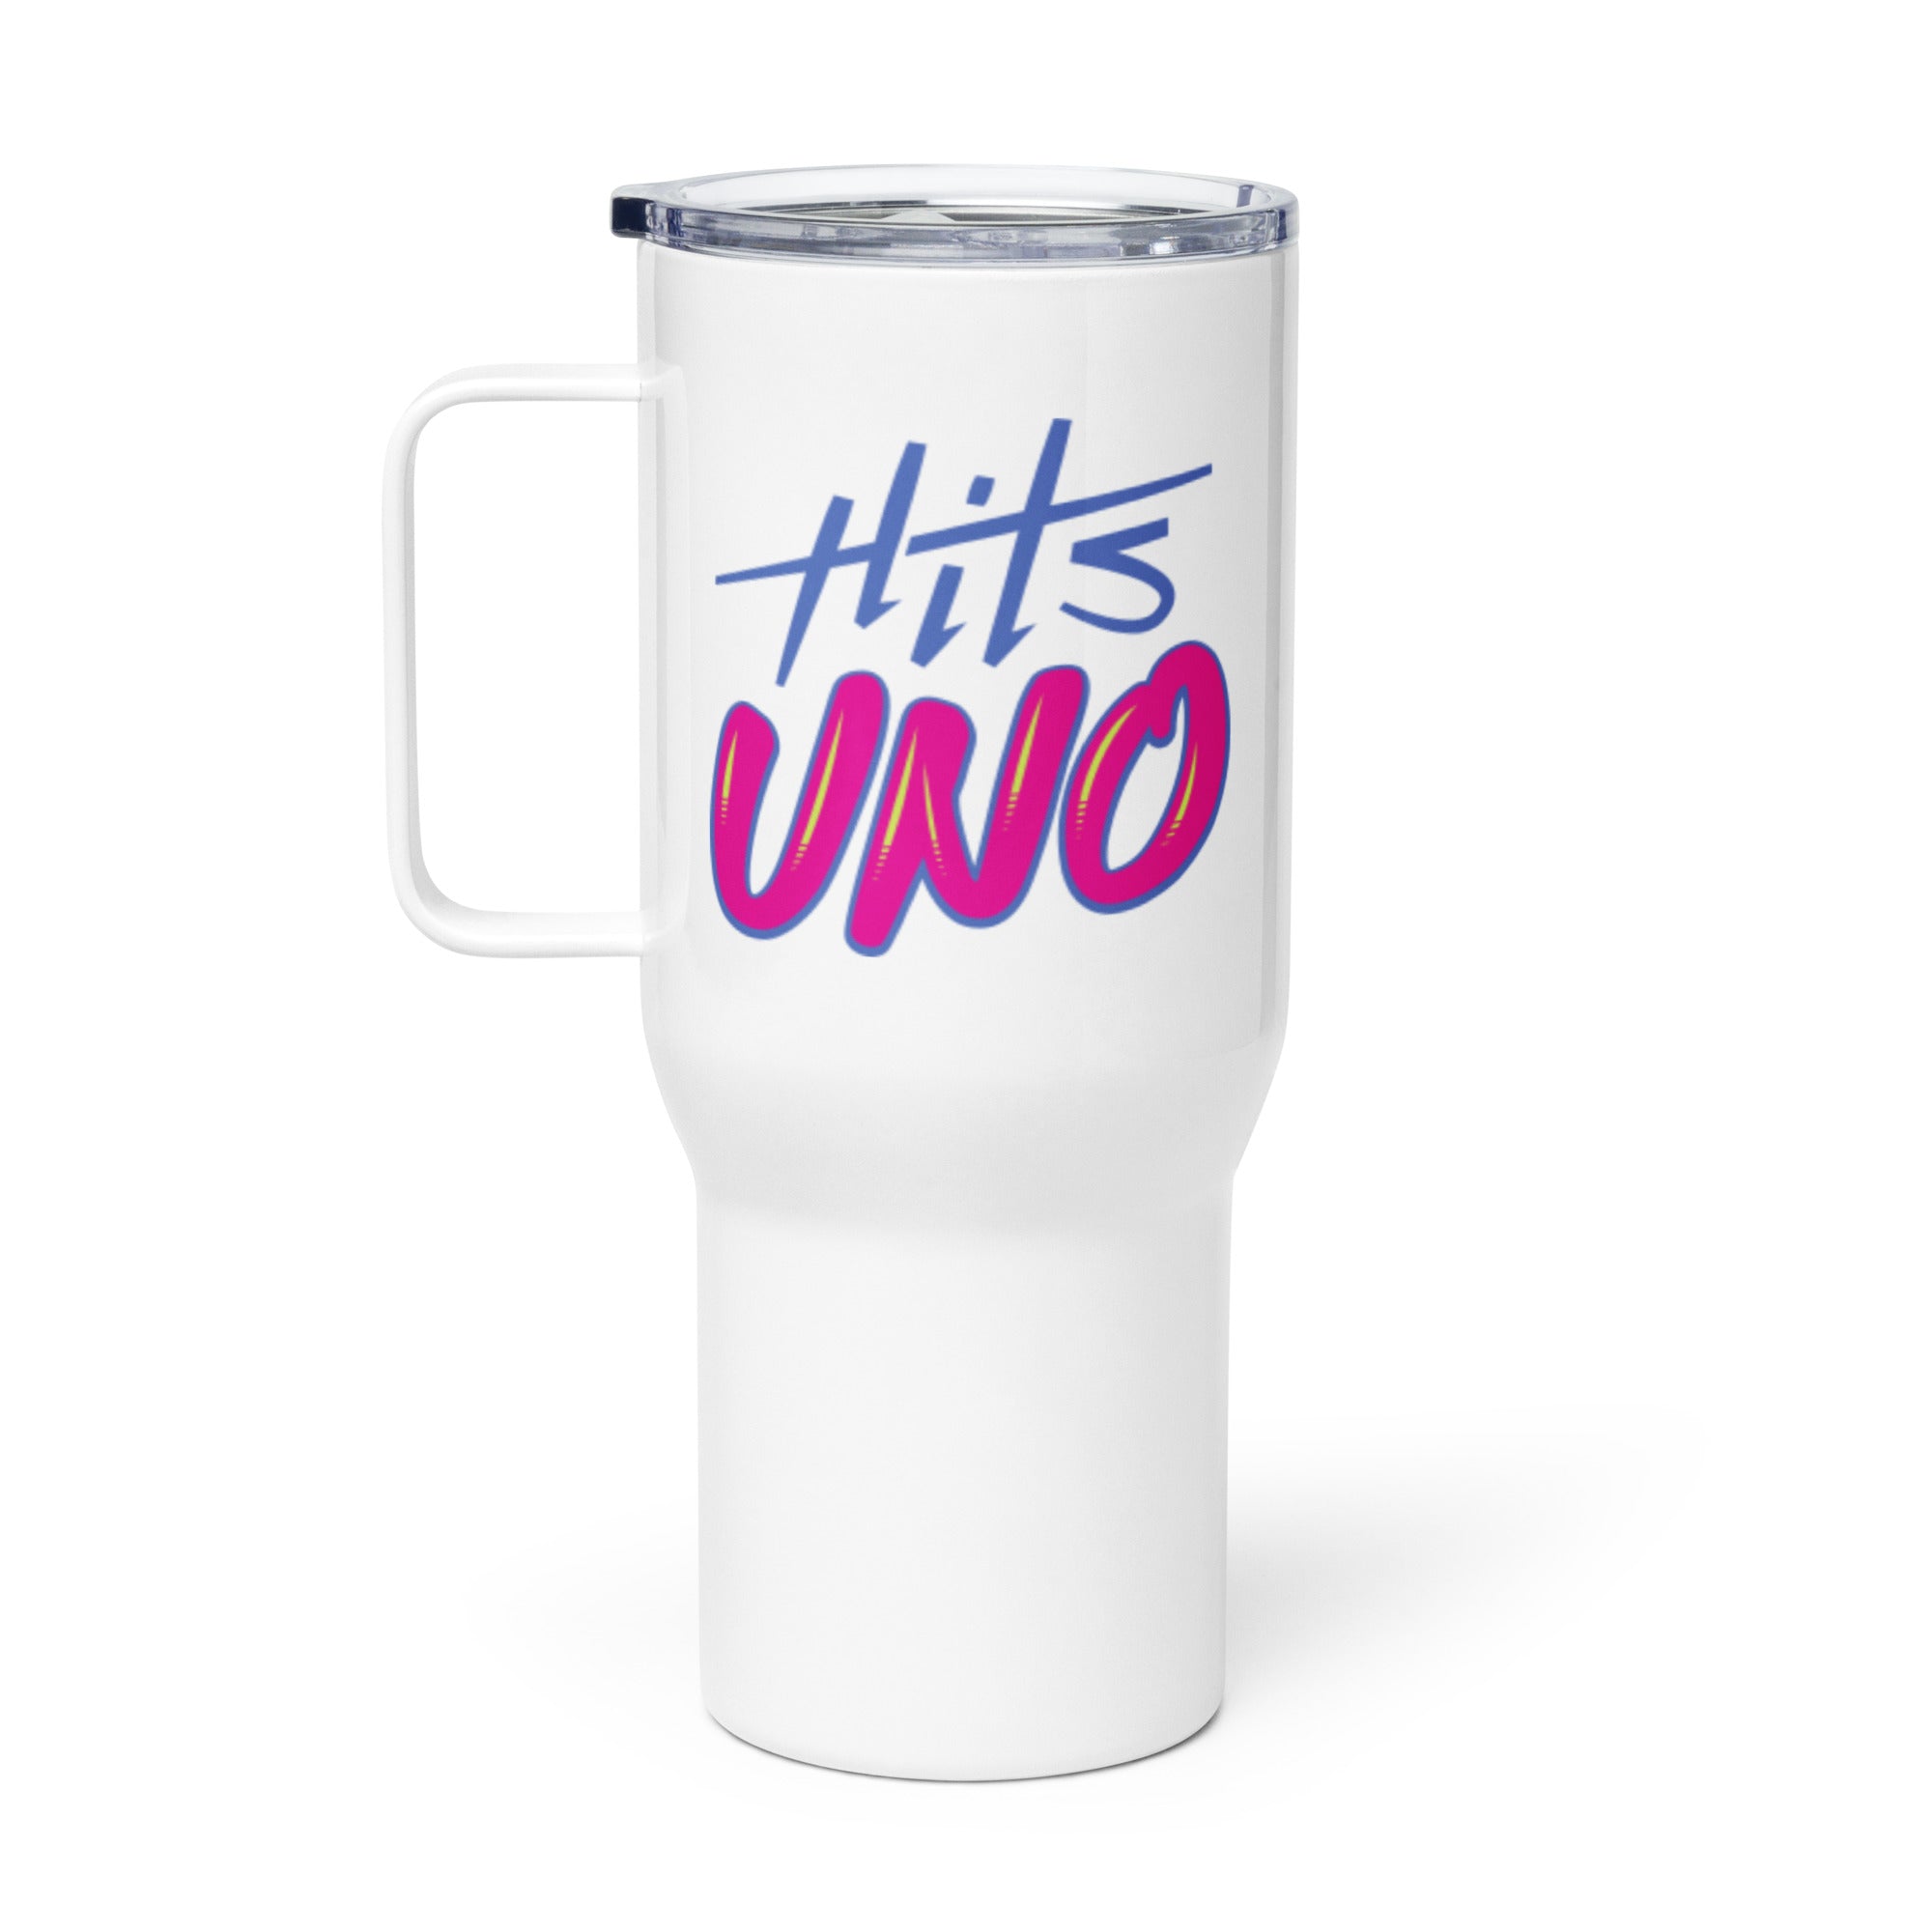 Hits Uno: Travel Mug